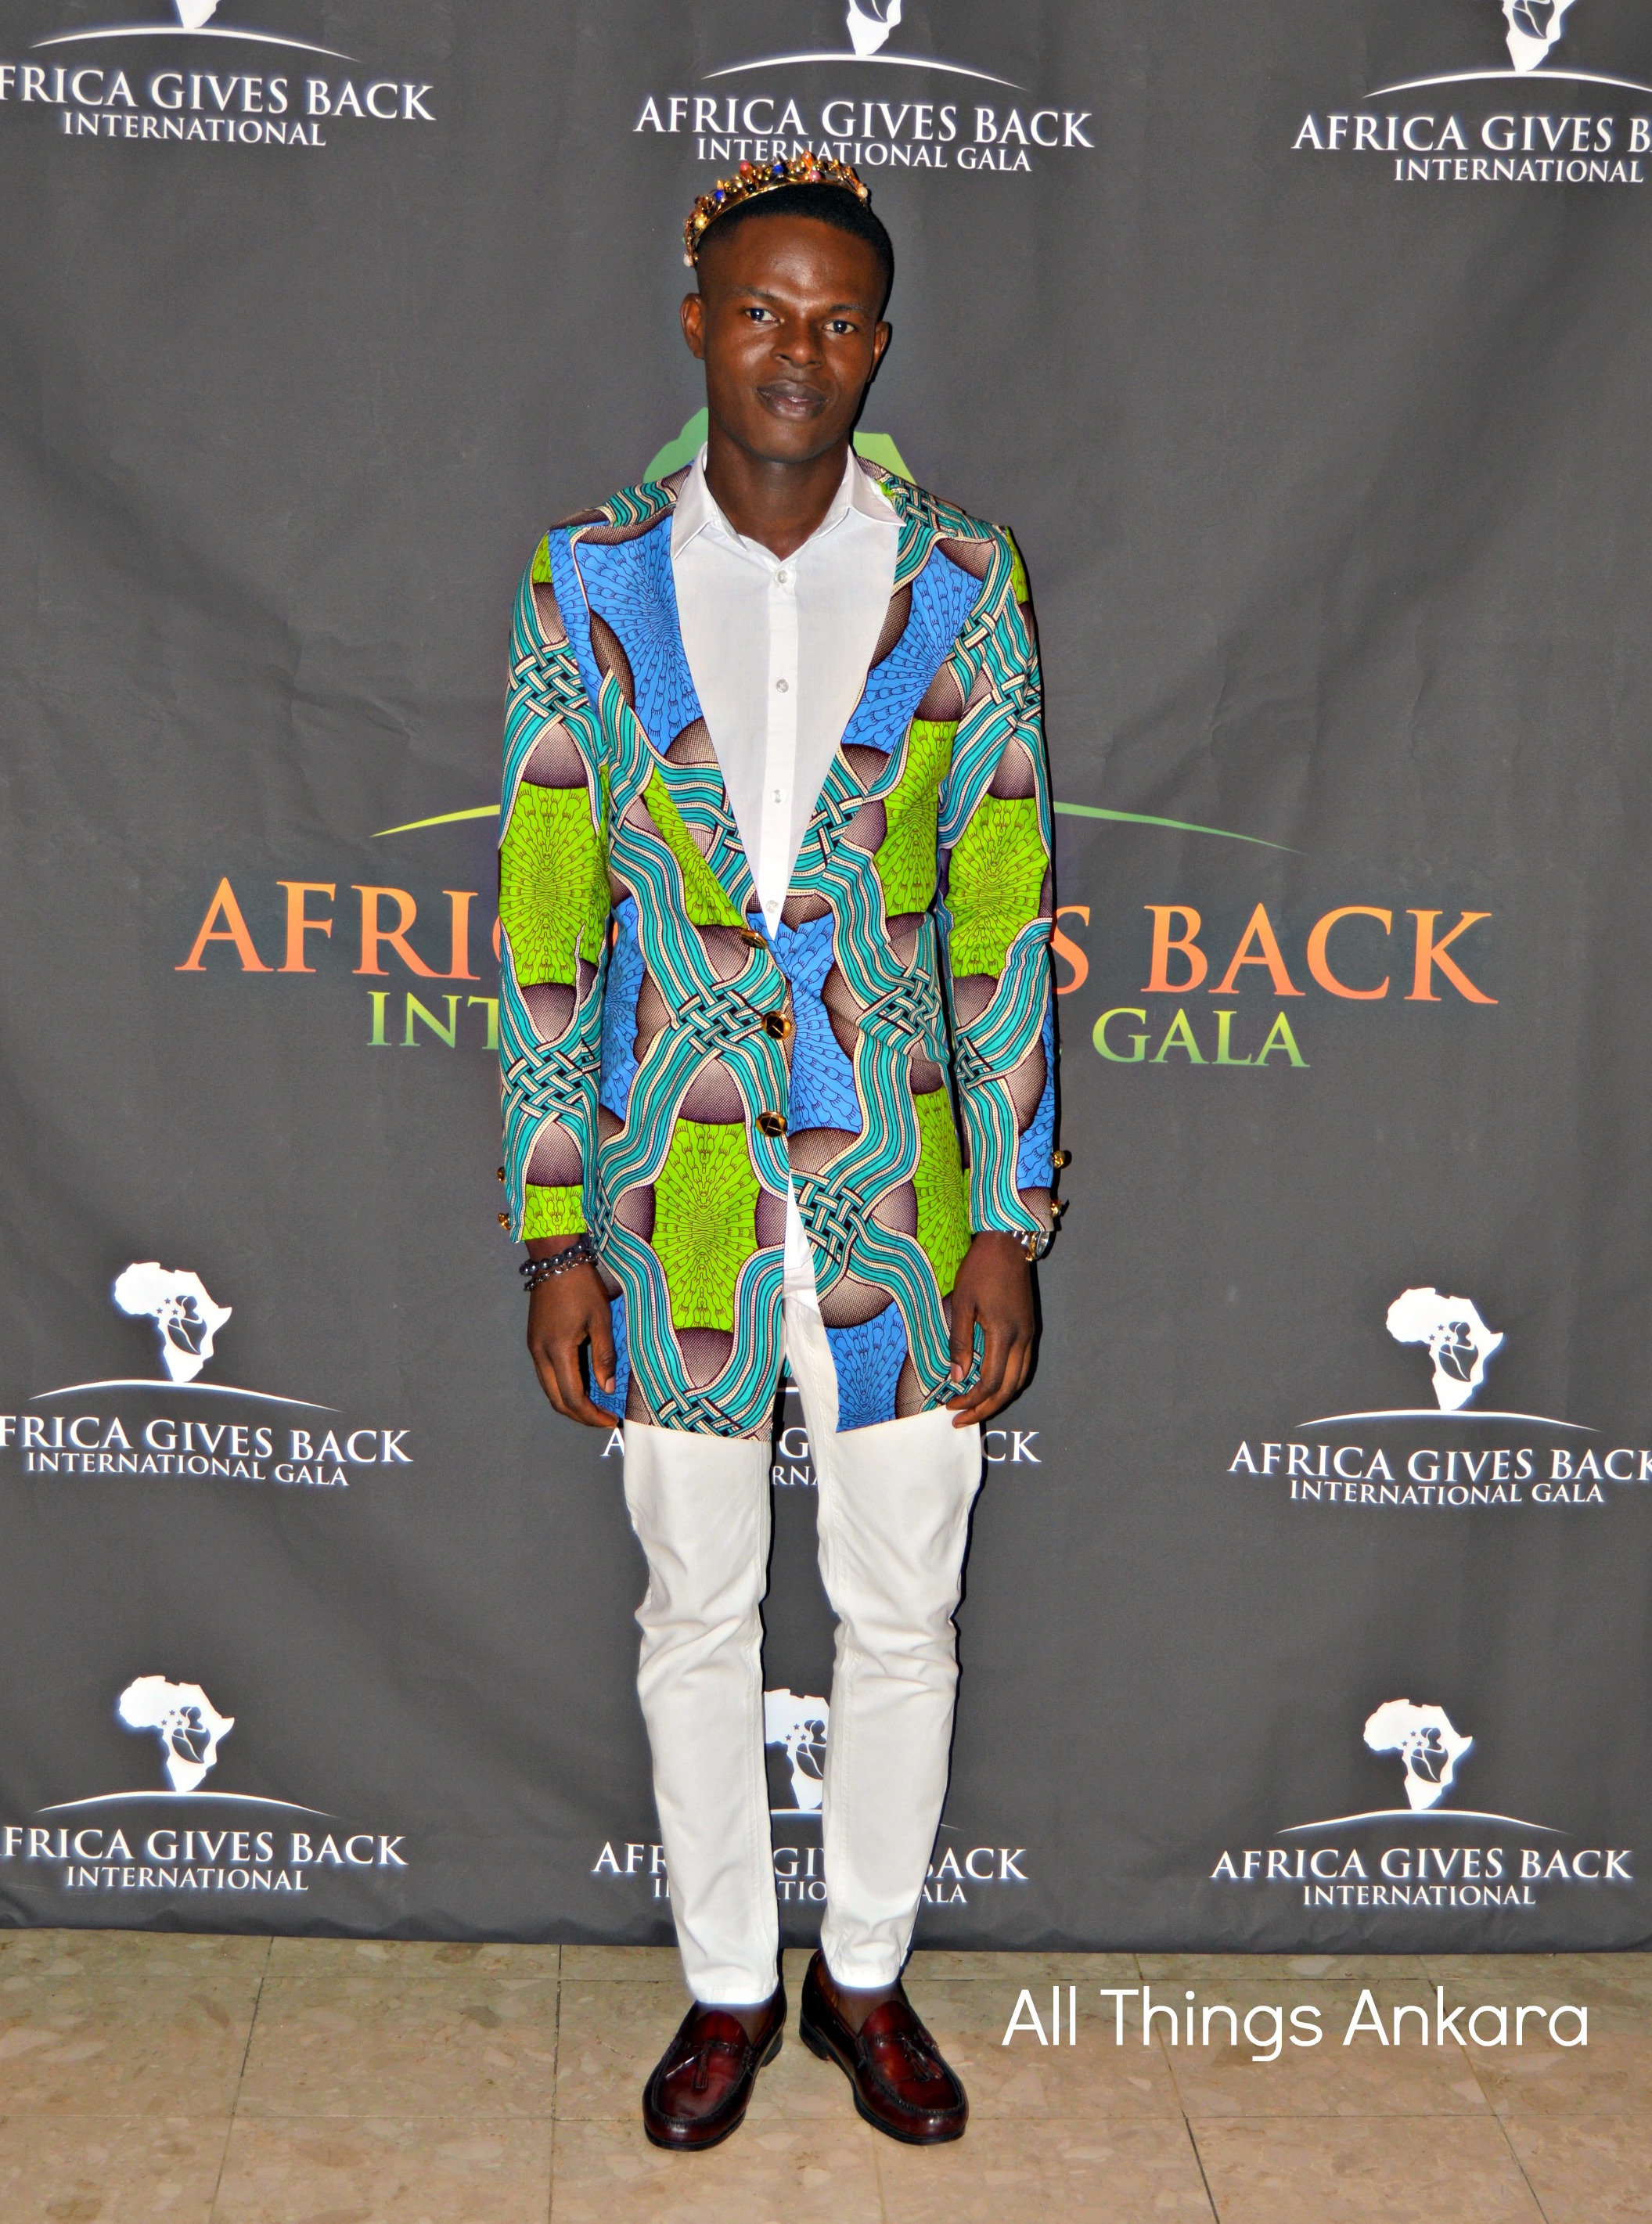 Gala-All Things Ankara's Best Dressed Men at Africa Gives Back International Gala 2016 2